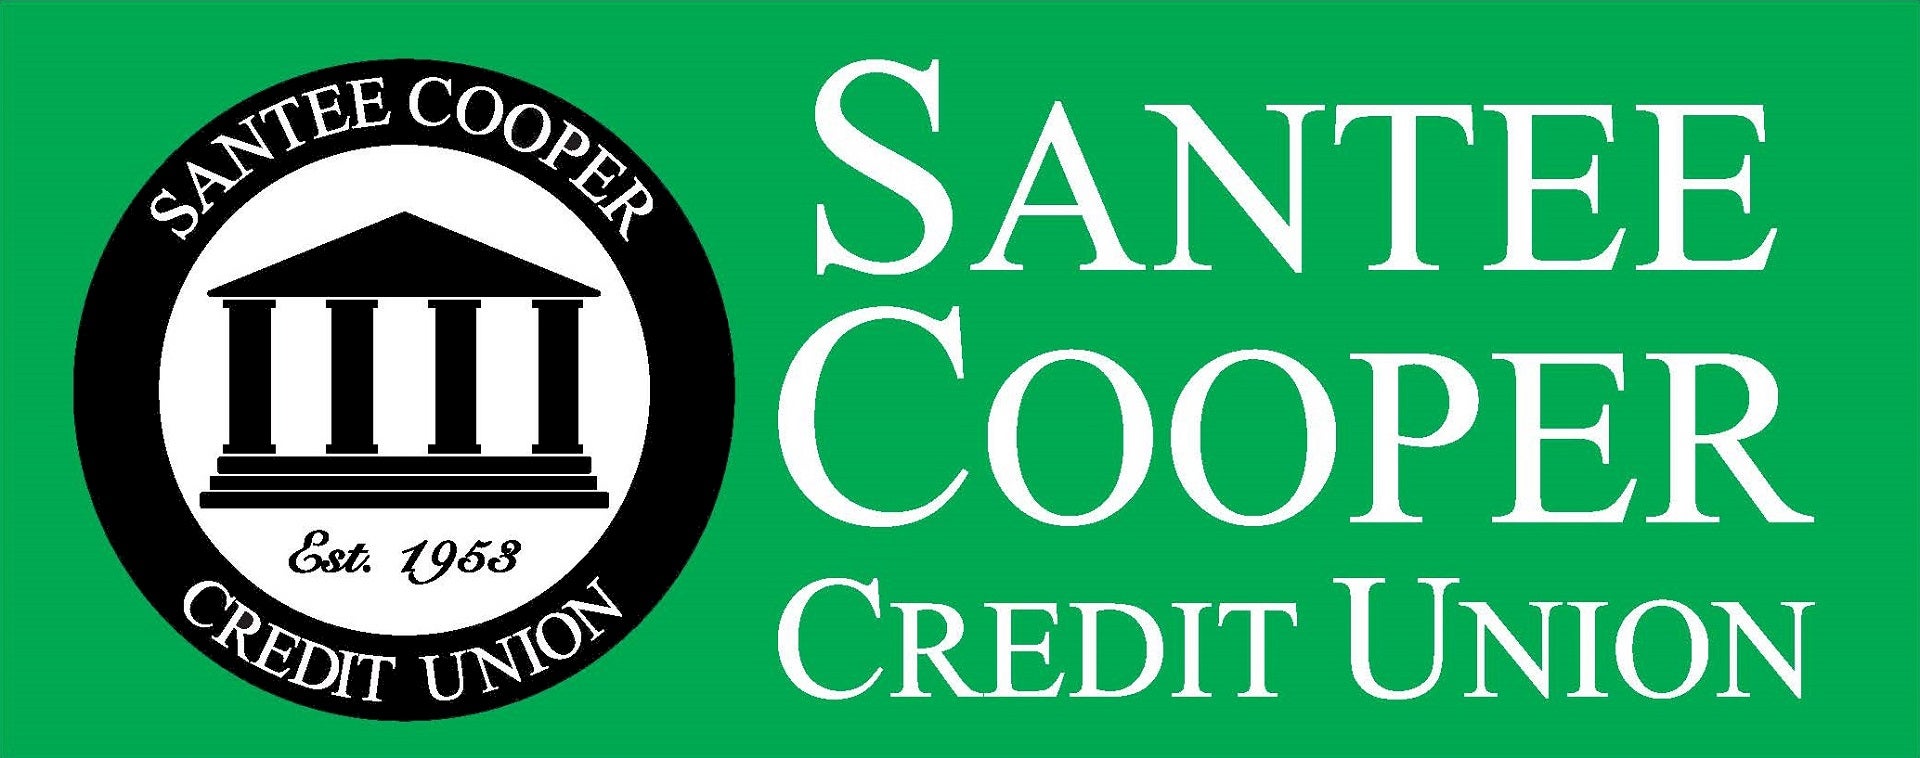 Santee Cooper Credit Union logo